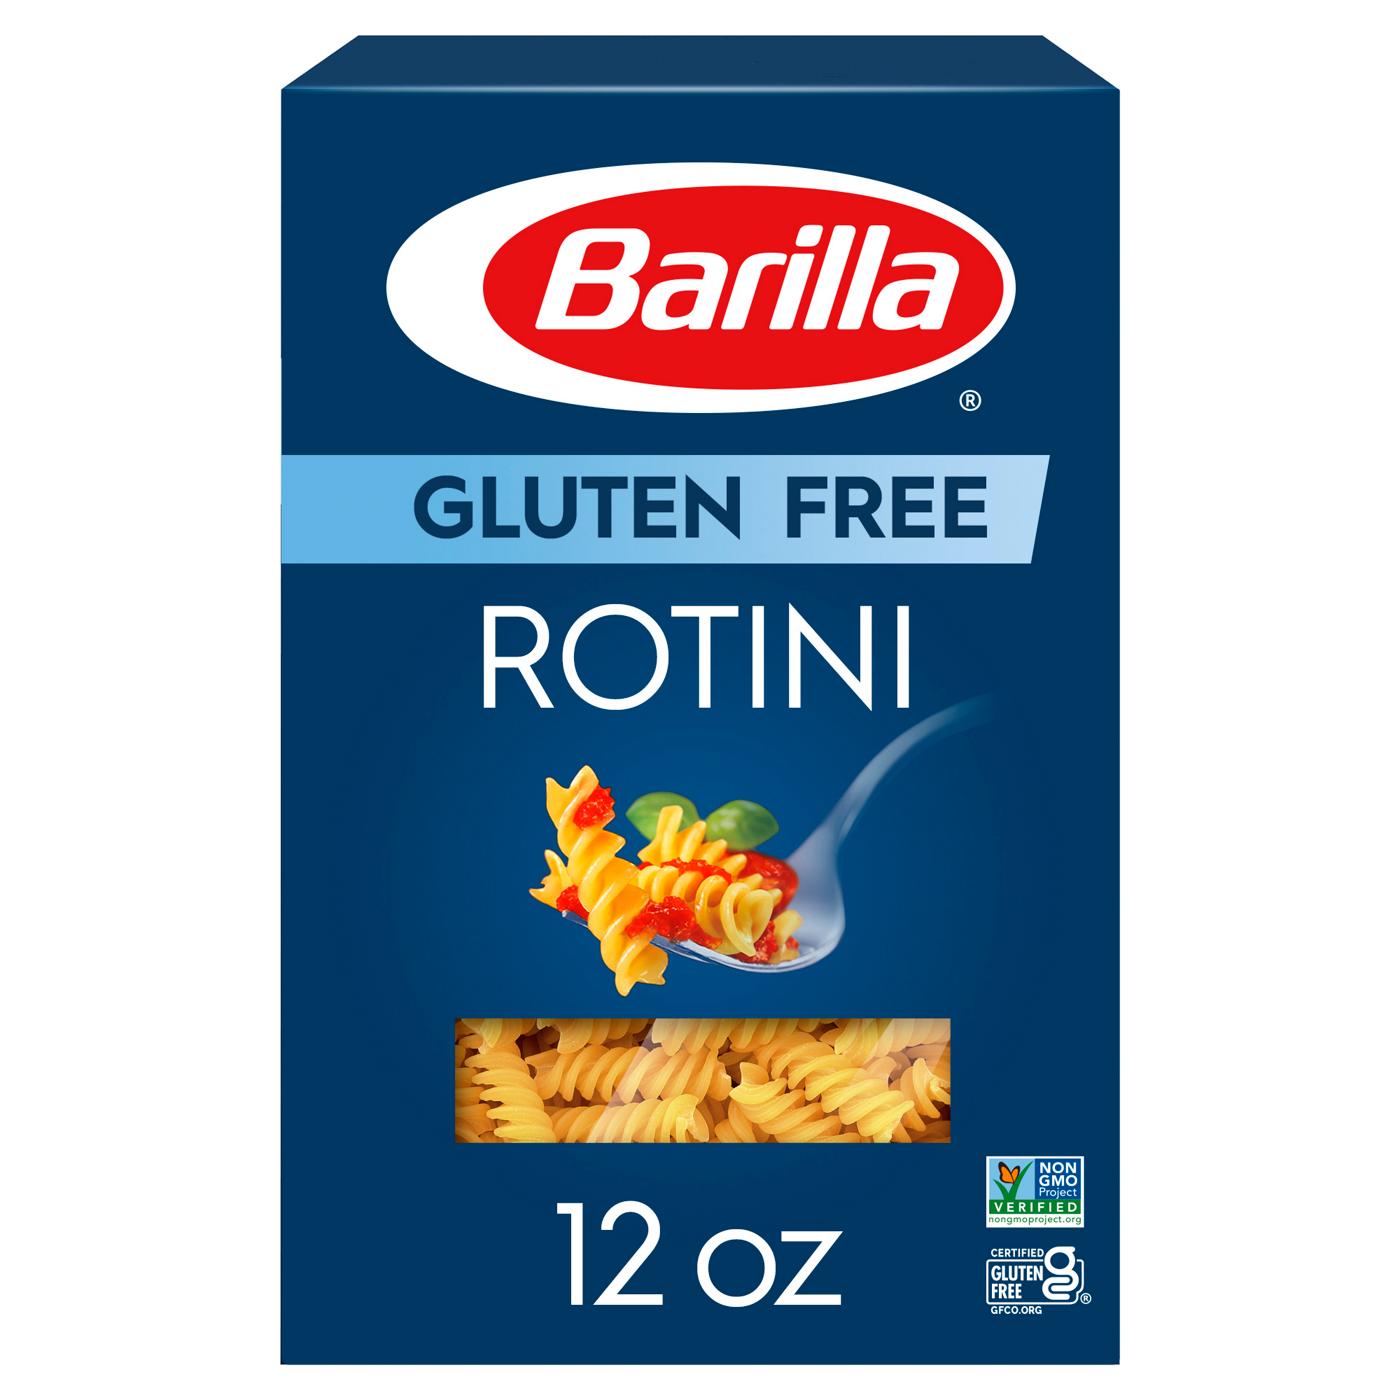 Barilla Gluten Free Rotini Pasta; image 1 of 7